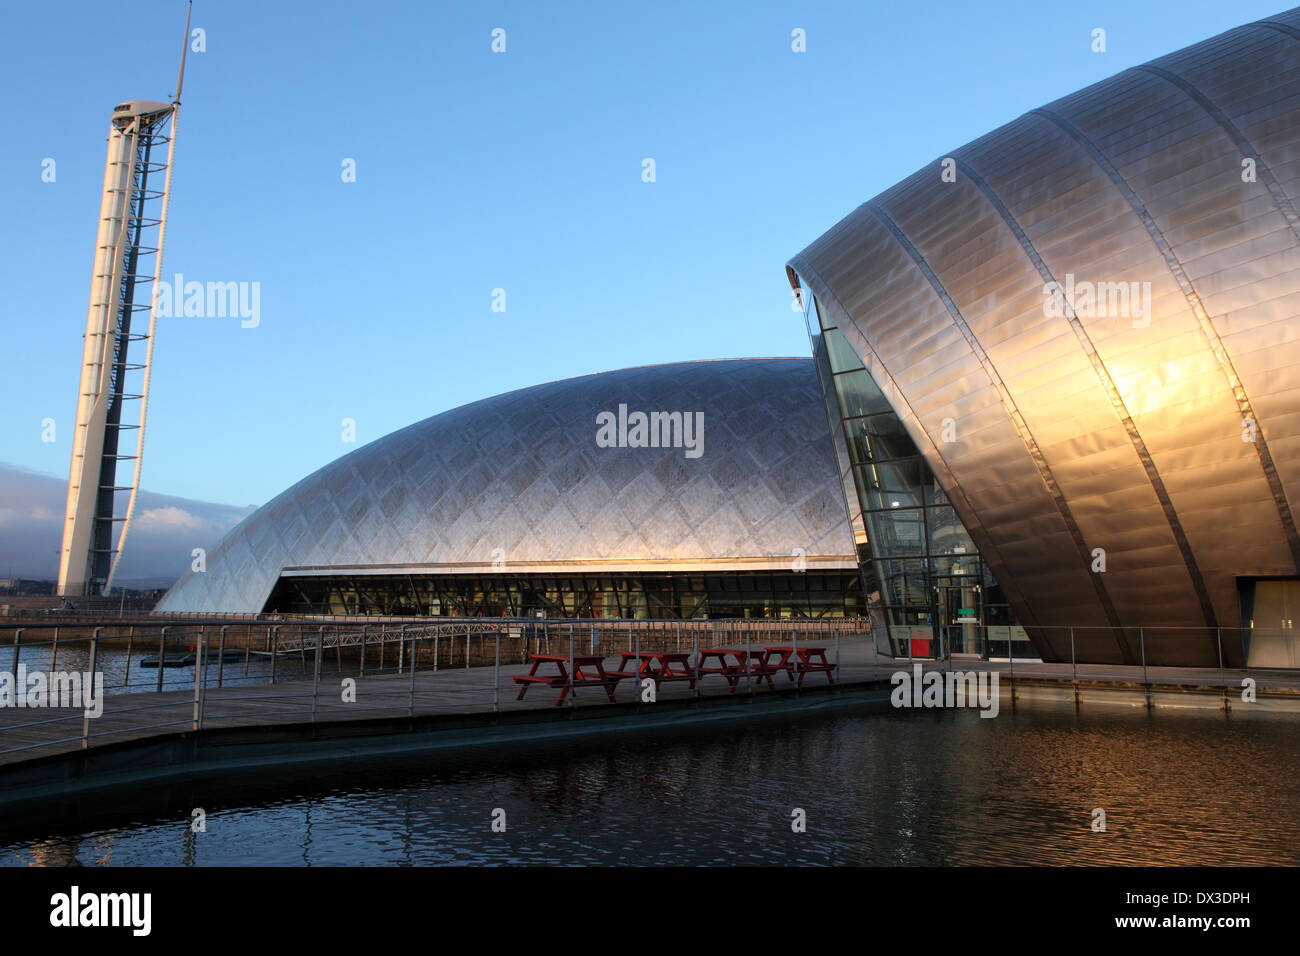 The metallic facade of the Imax Cinema and Glasgow Science Centre in Glasgow, Scotland. Stock Photo